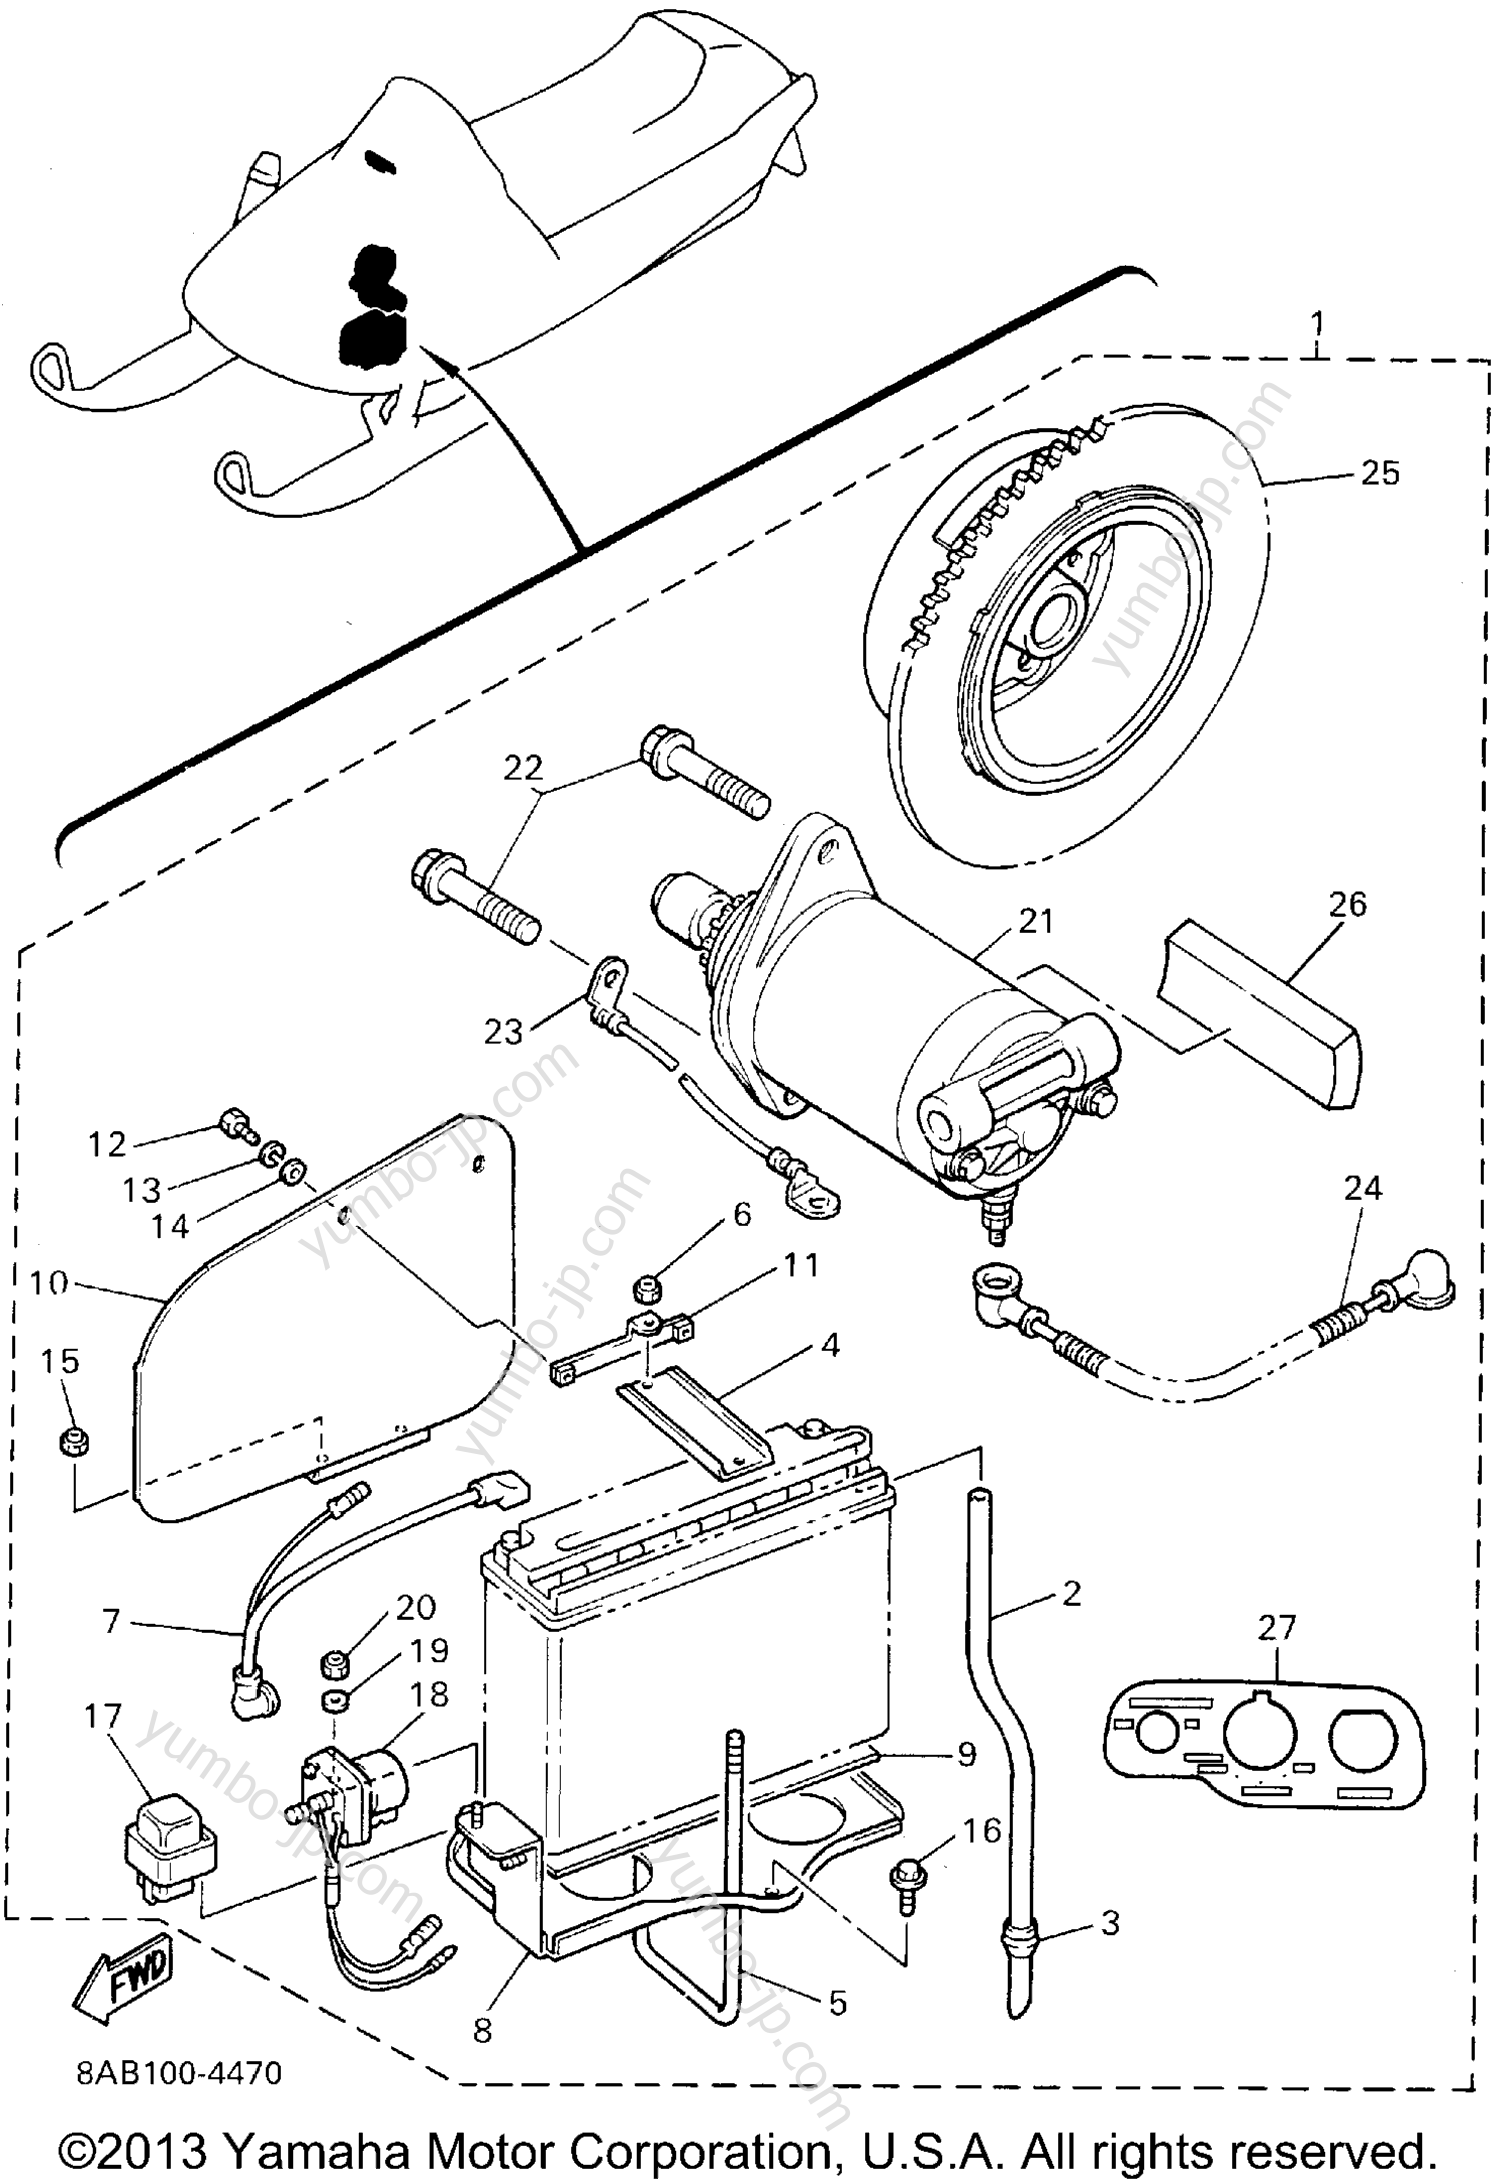 Electric Start Kit (Alternate) for snowmobiles YAMAHA VMAX 600 LE (ELEC START) (VX600EU) 1994 year